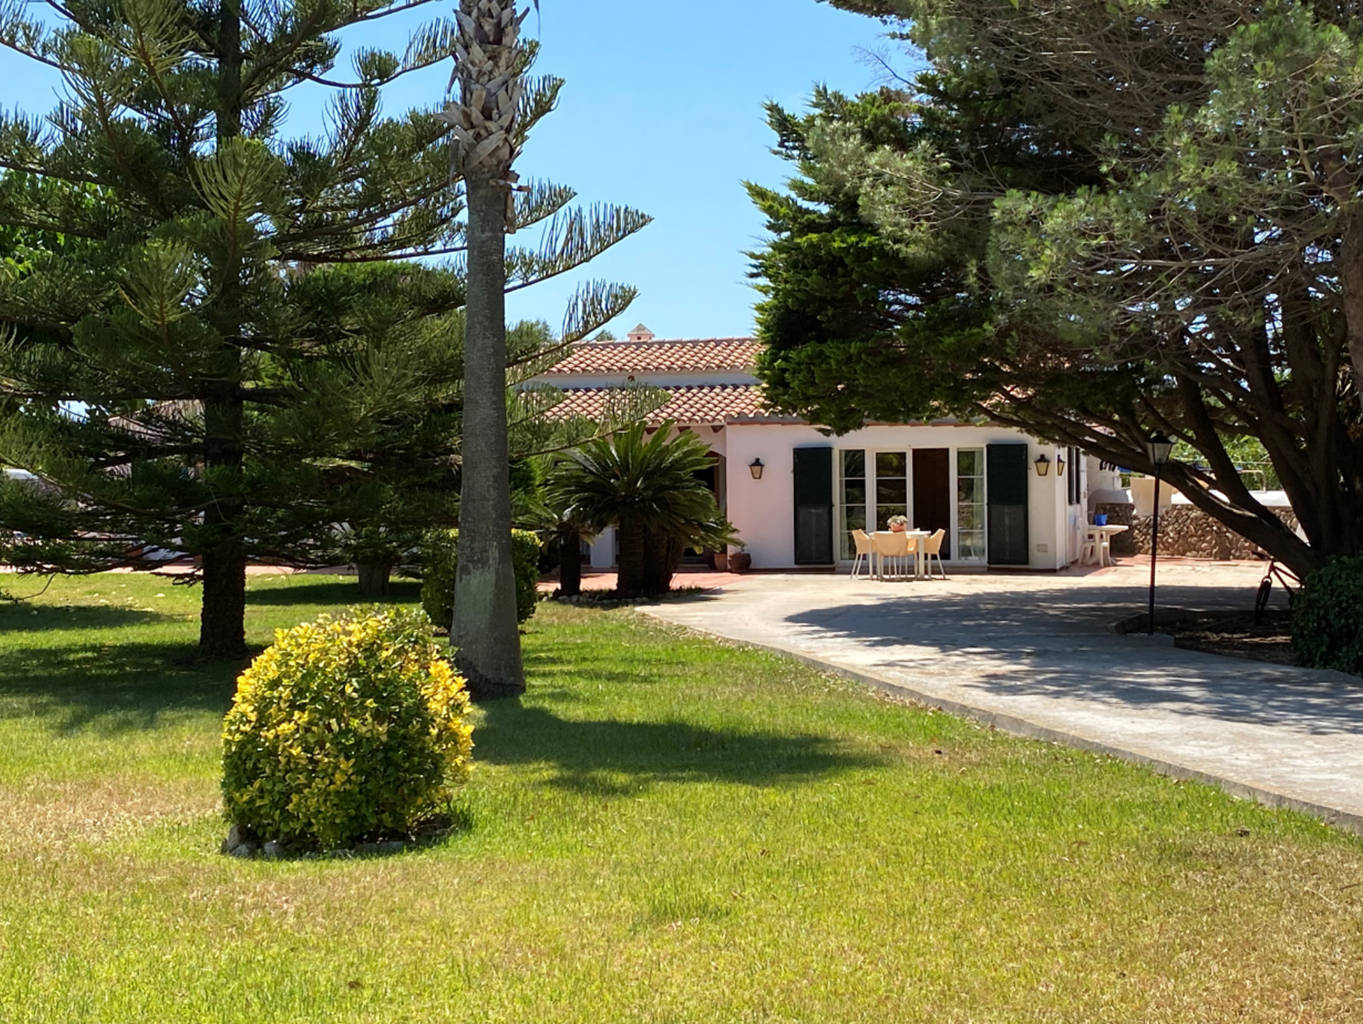 Villa for sale in Ciutadella_ garden